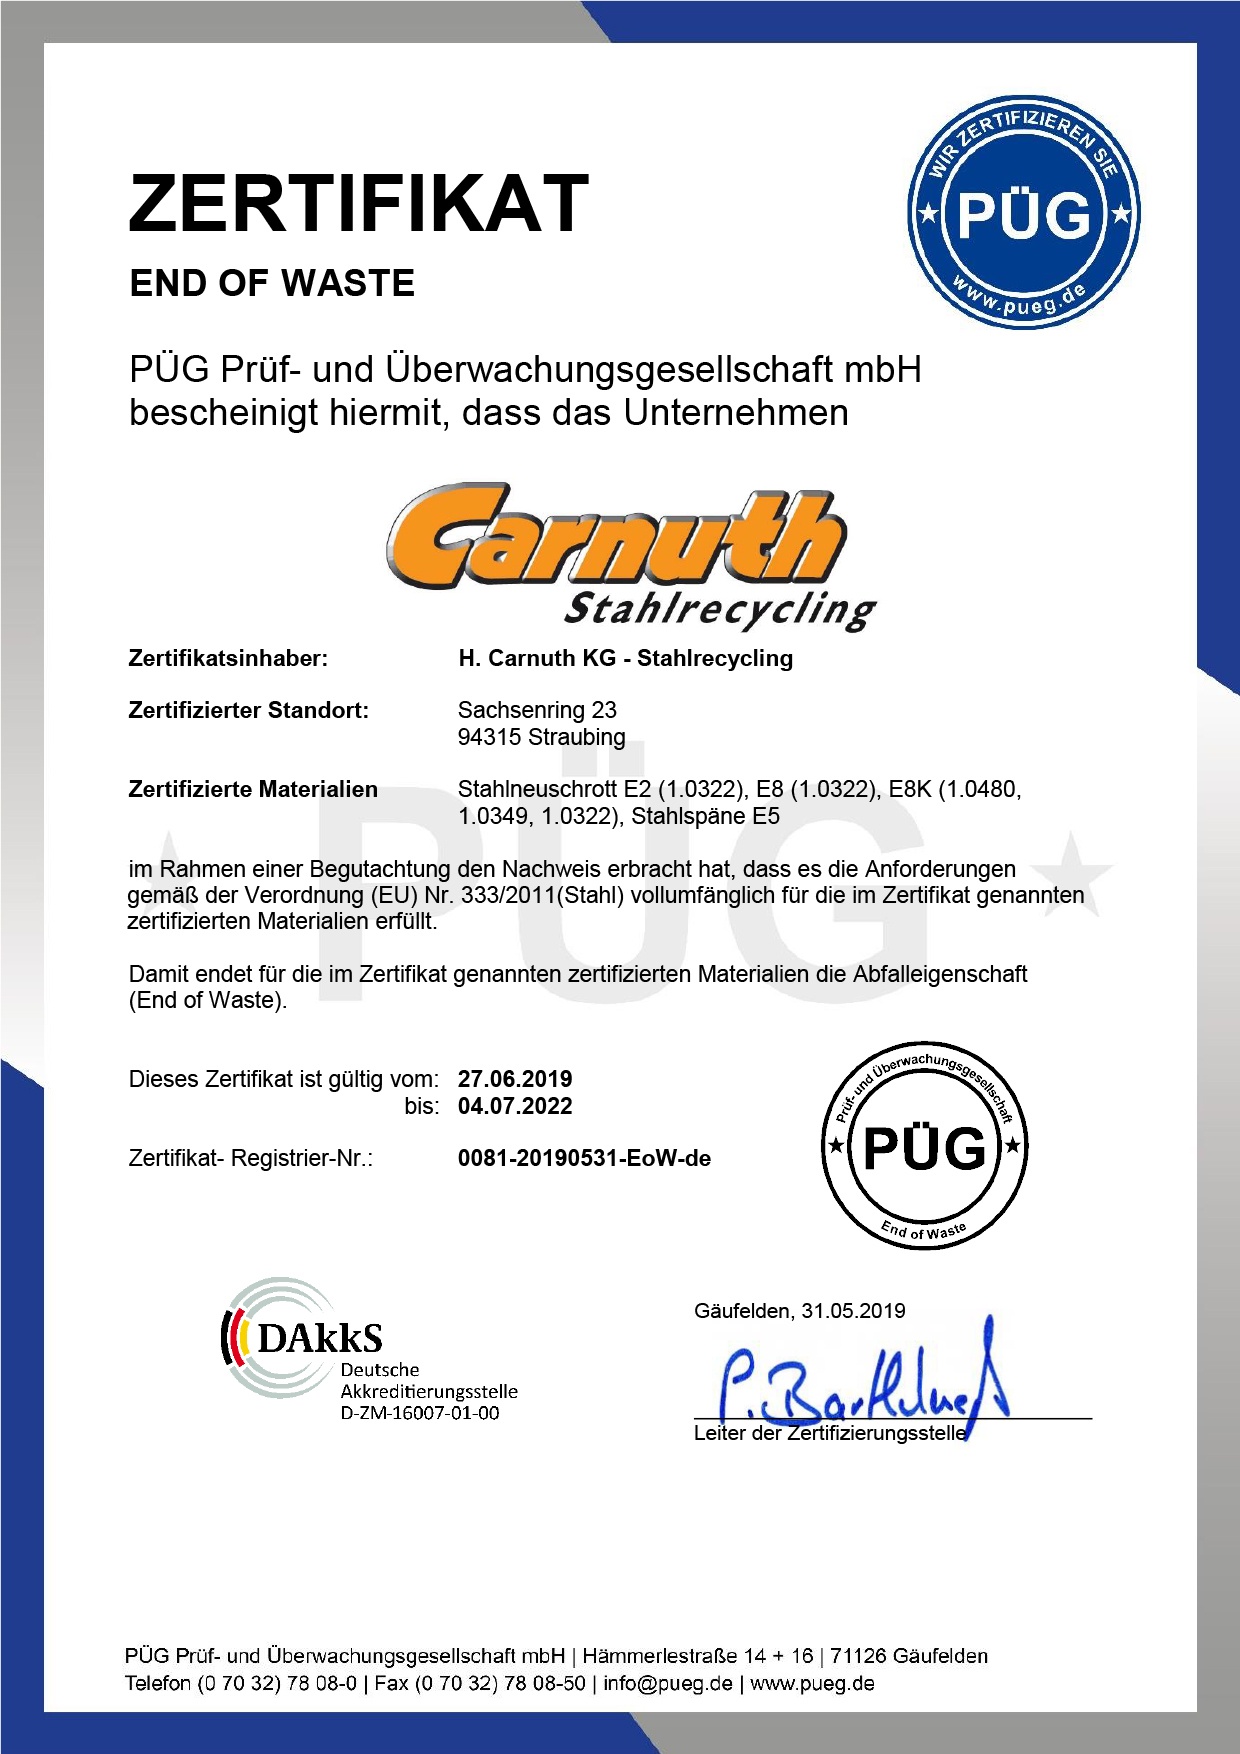 Zertifikat Ent of Waste